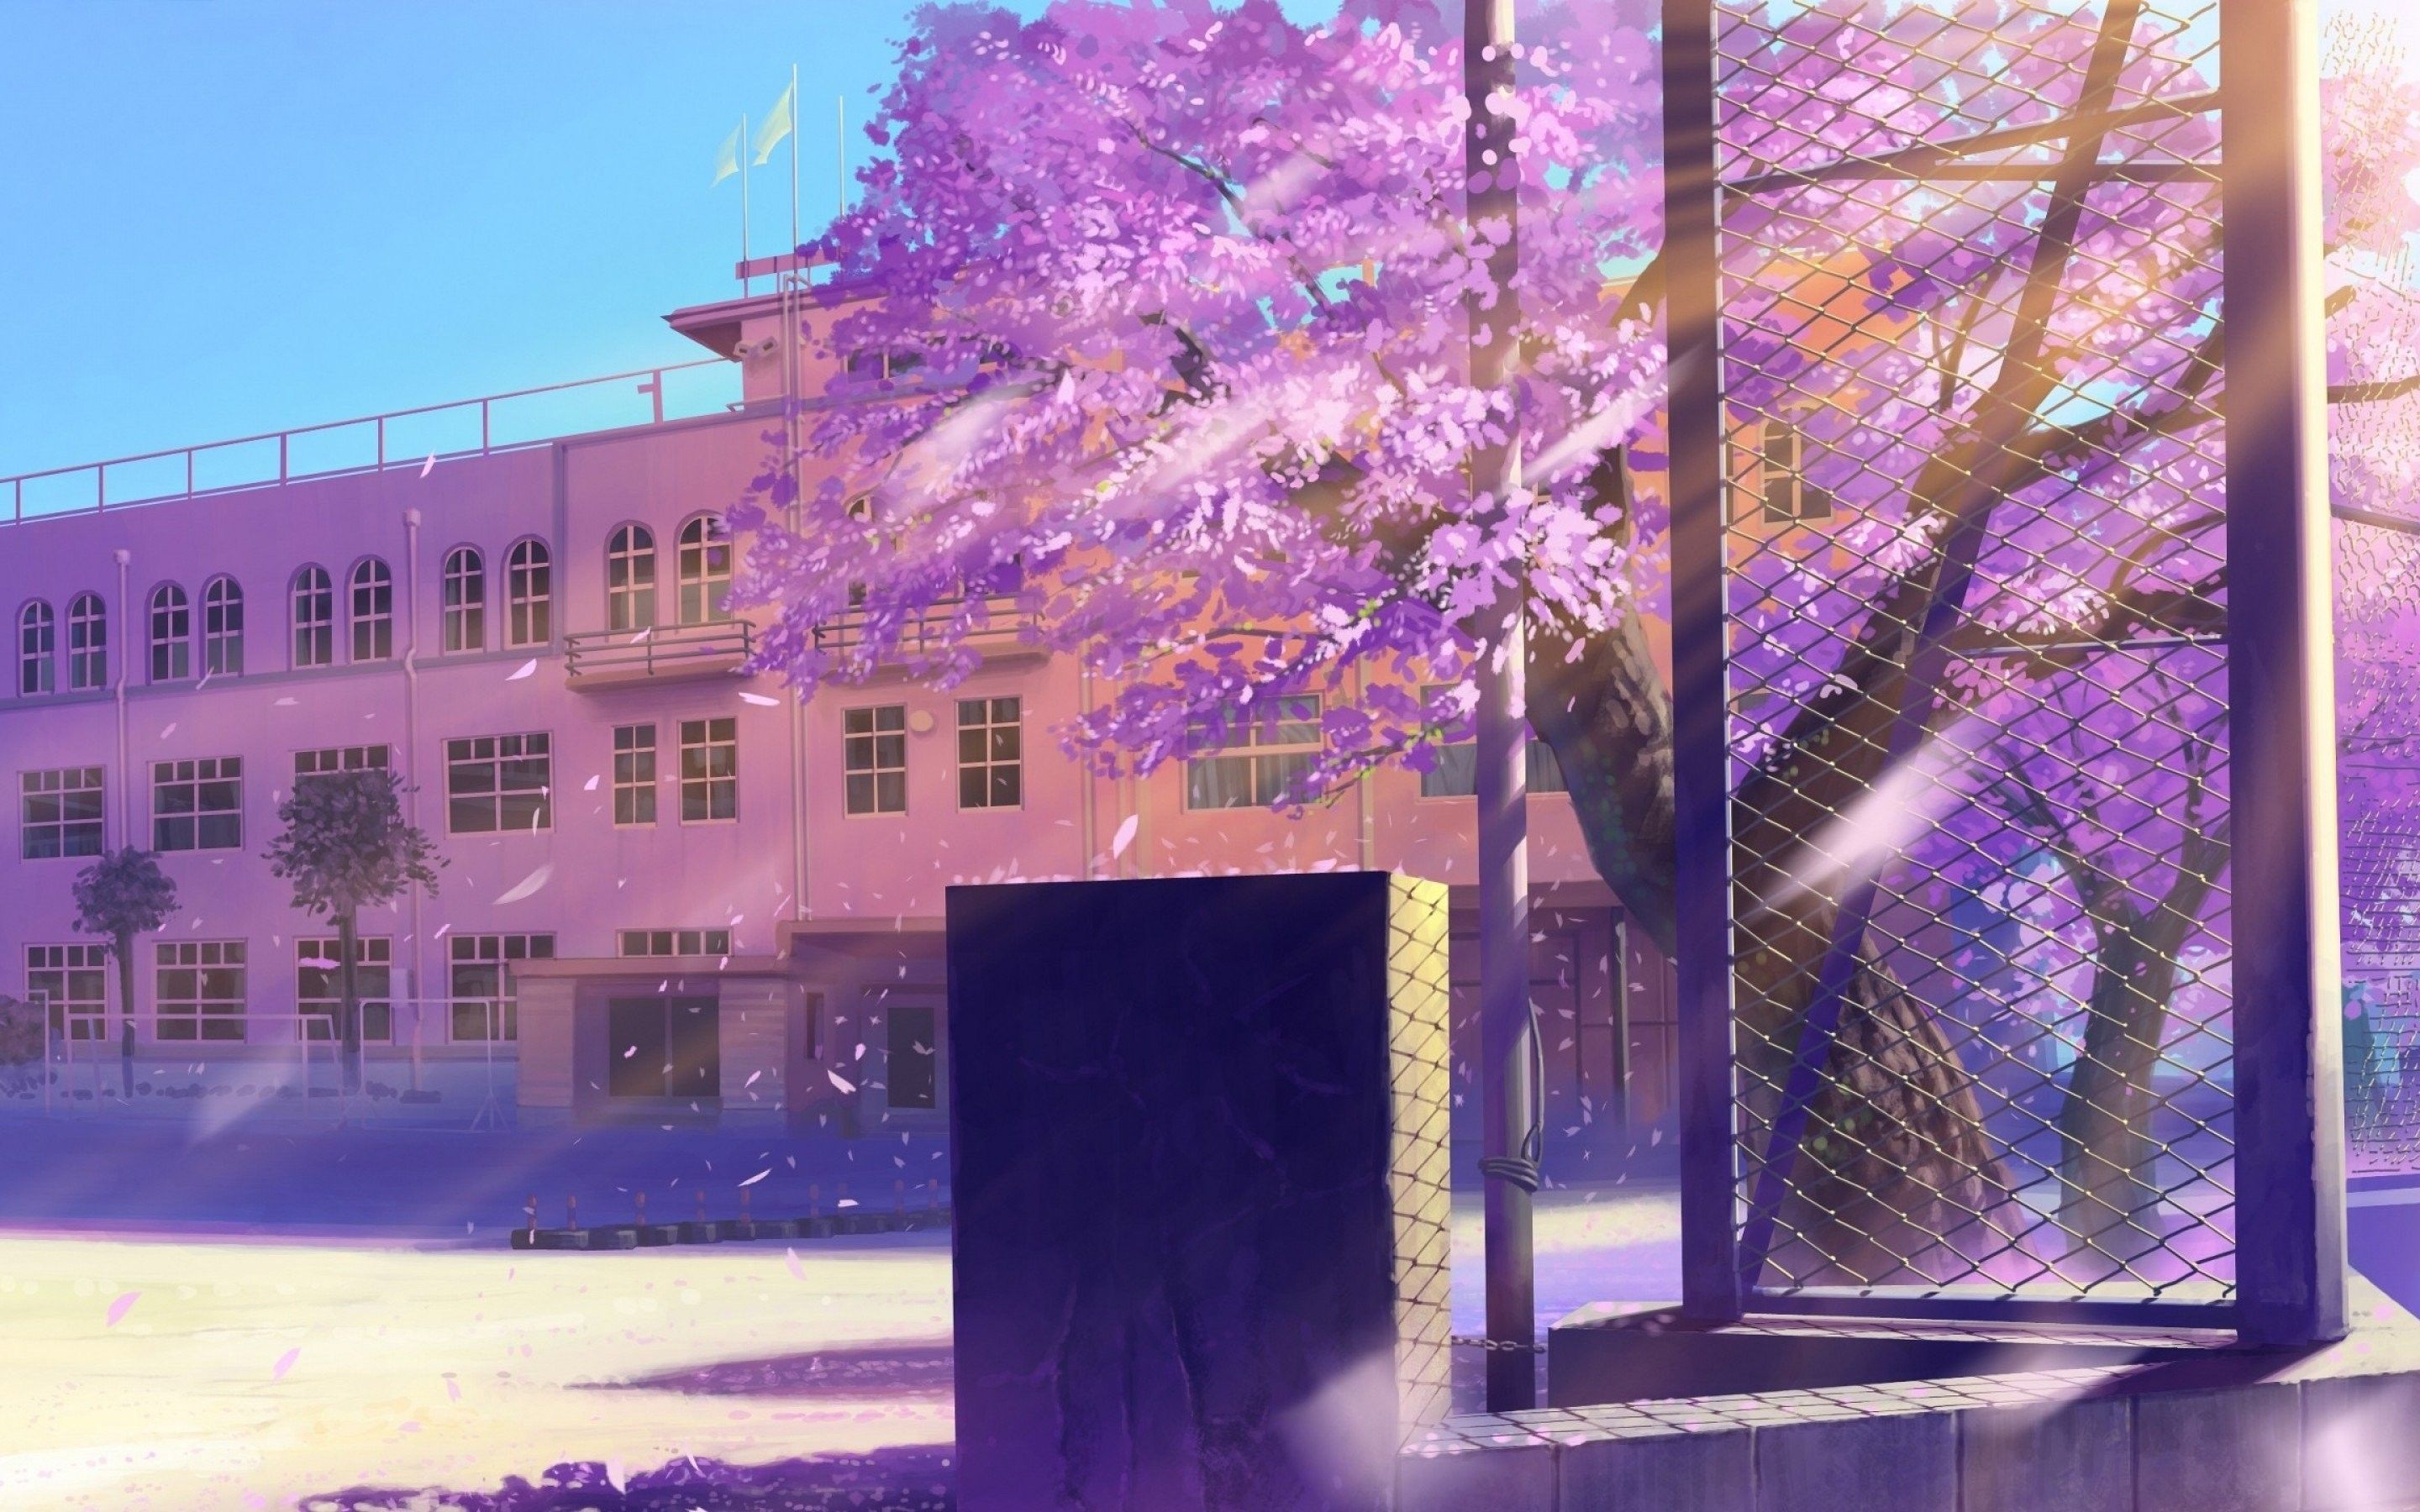 Anime Aesthetic Background